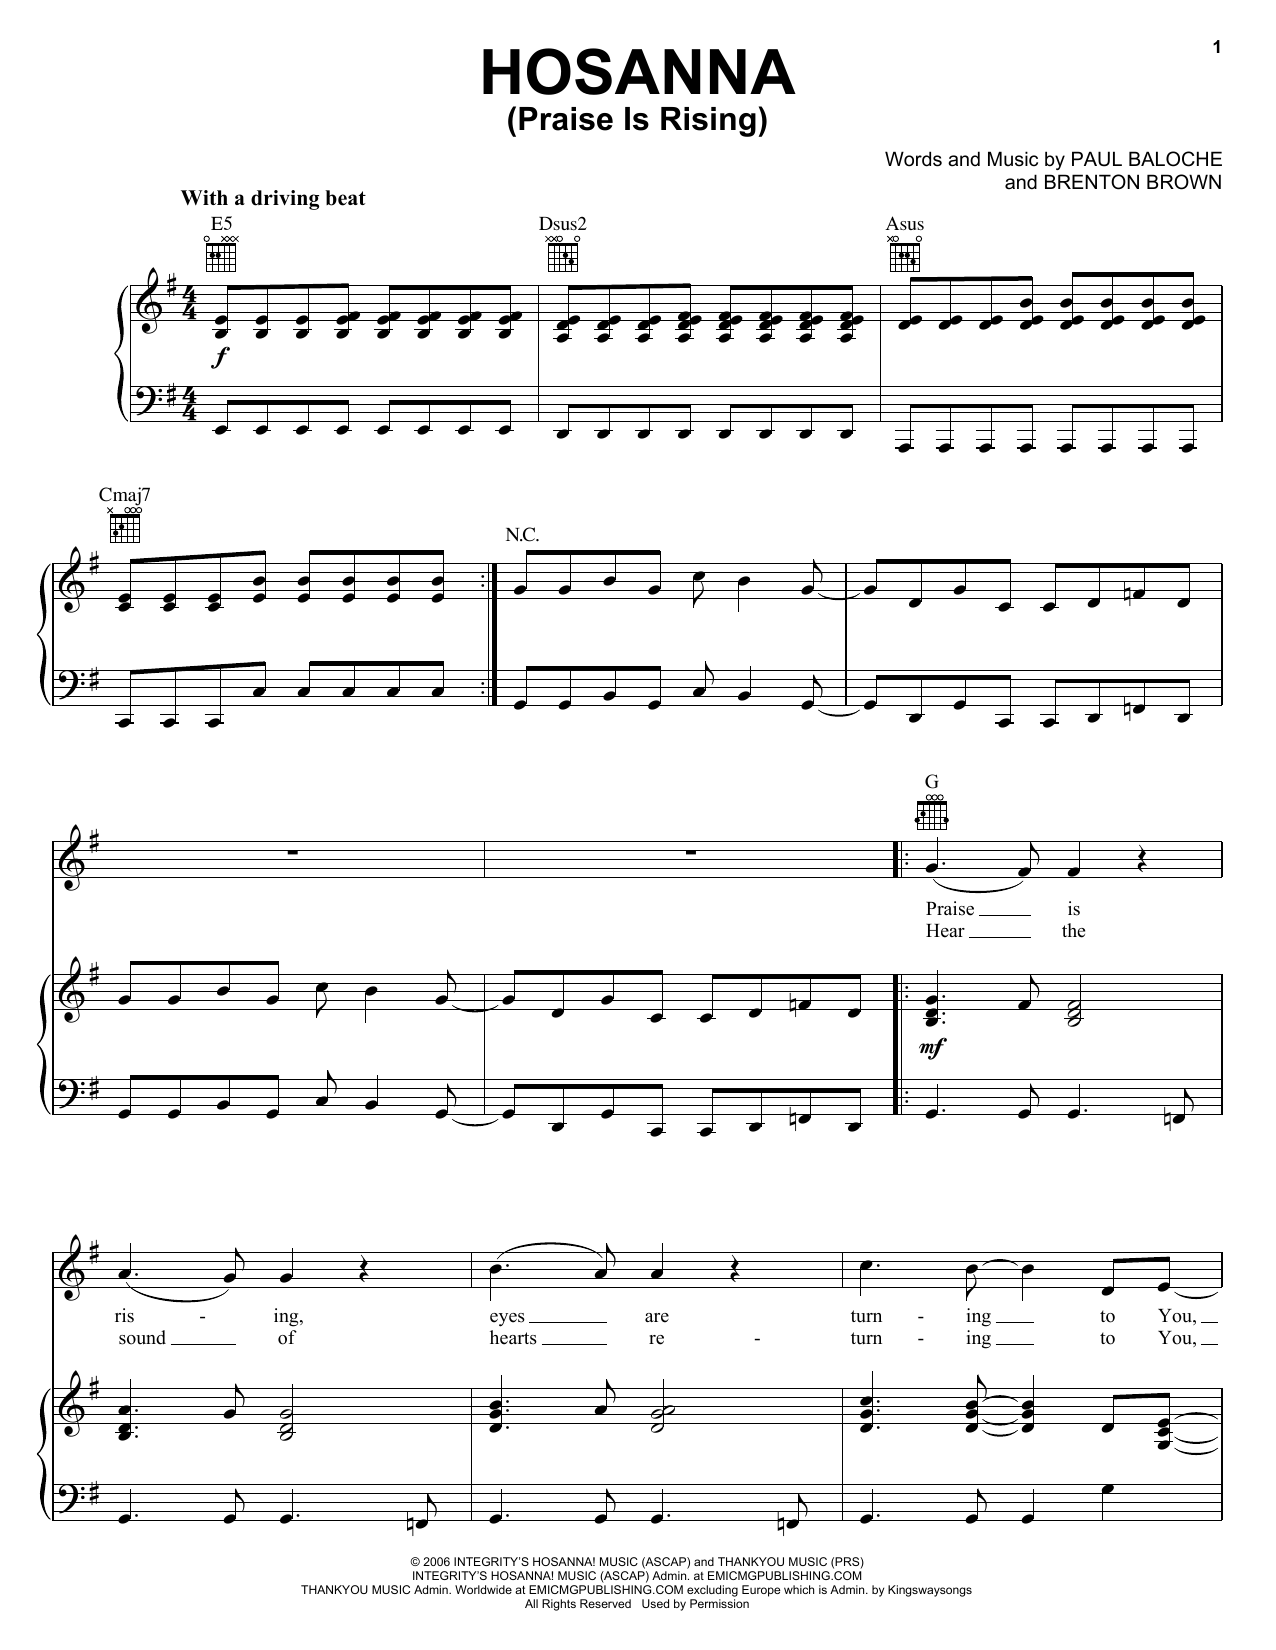 Paul Baloche Hosanna (Praise Is Rising) Sheet Music Notes & Chords for Alto Sax Solo - Download or Print PDF